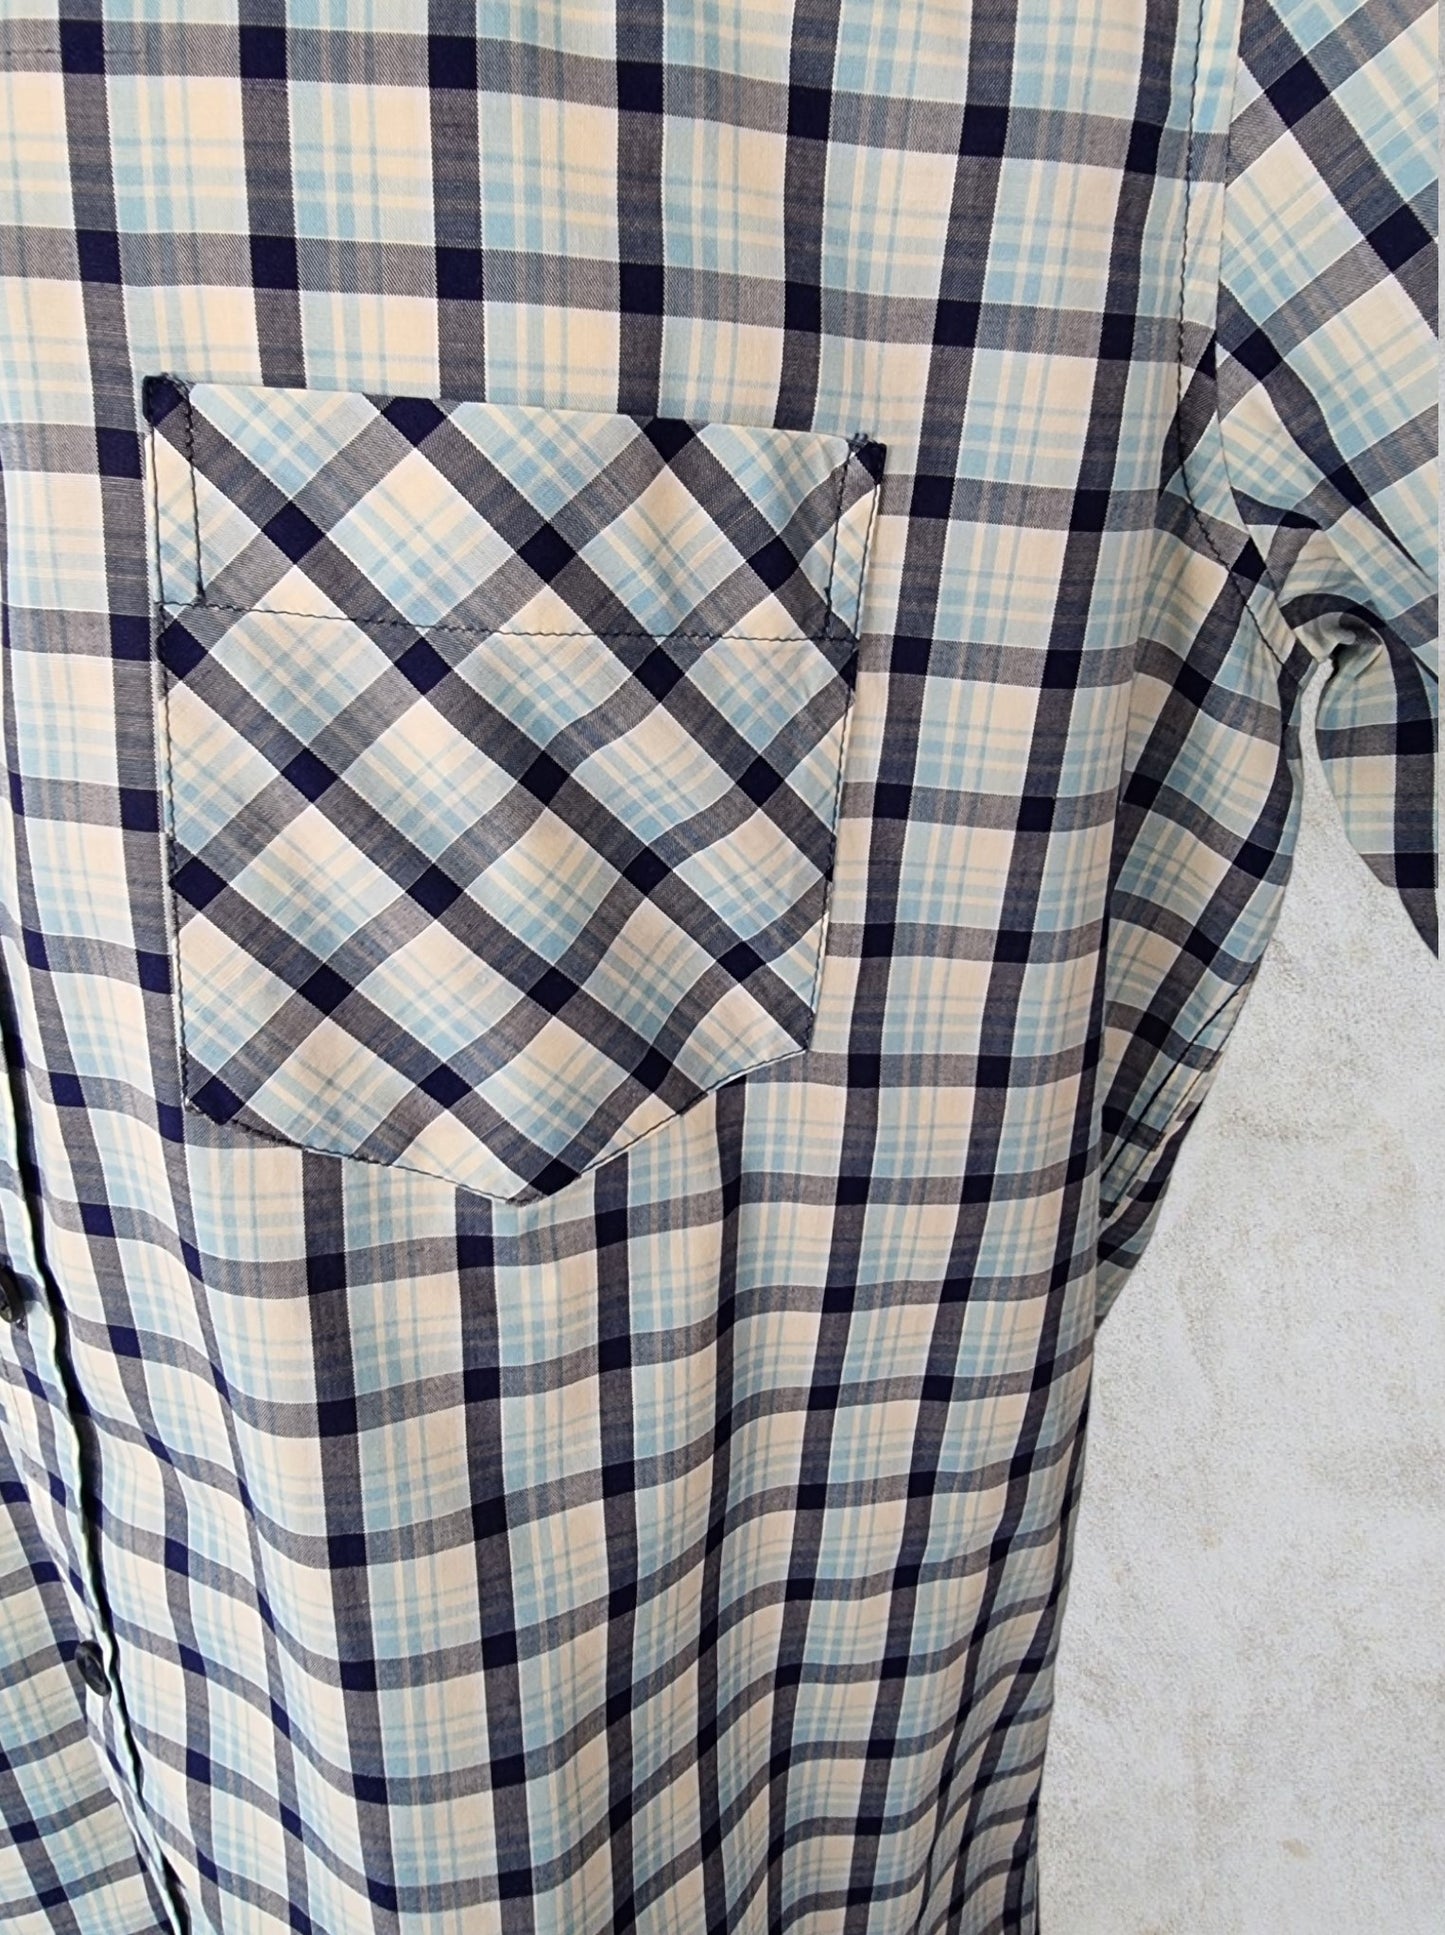 Samsoe&Samsoe Men’s Blue & White Check Short Sleeve Casual Shirt Size L Timeless Fashions